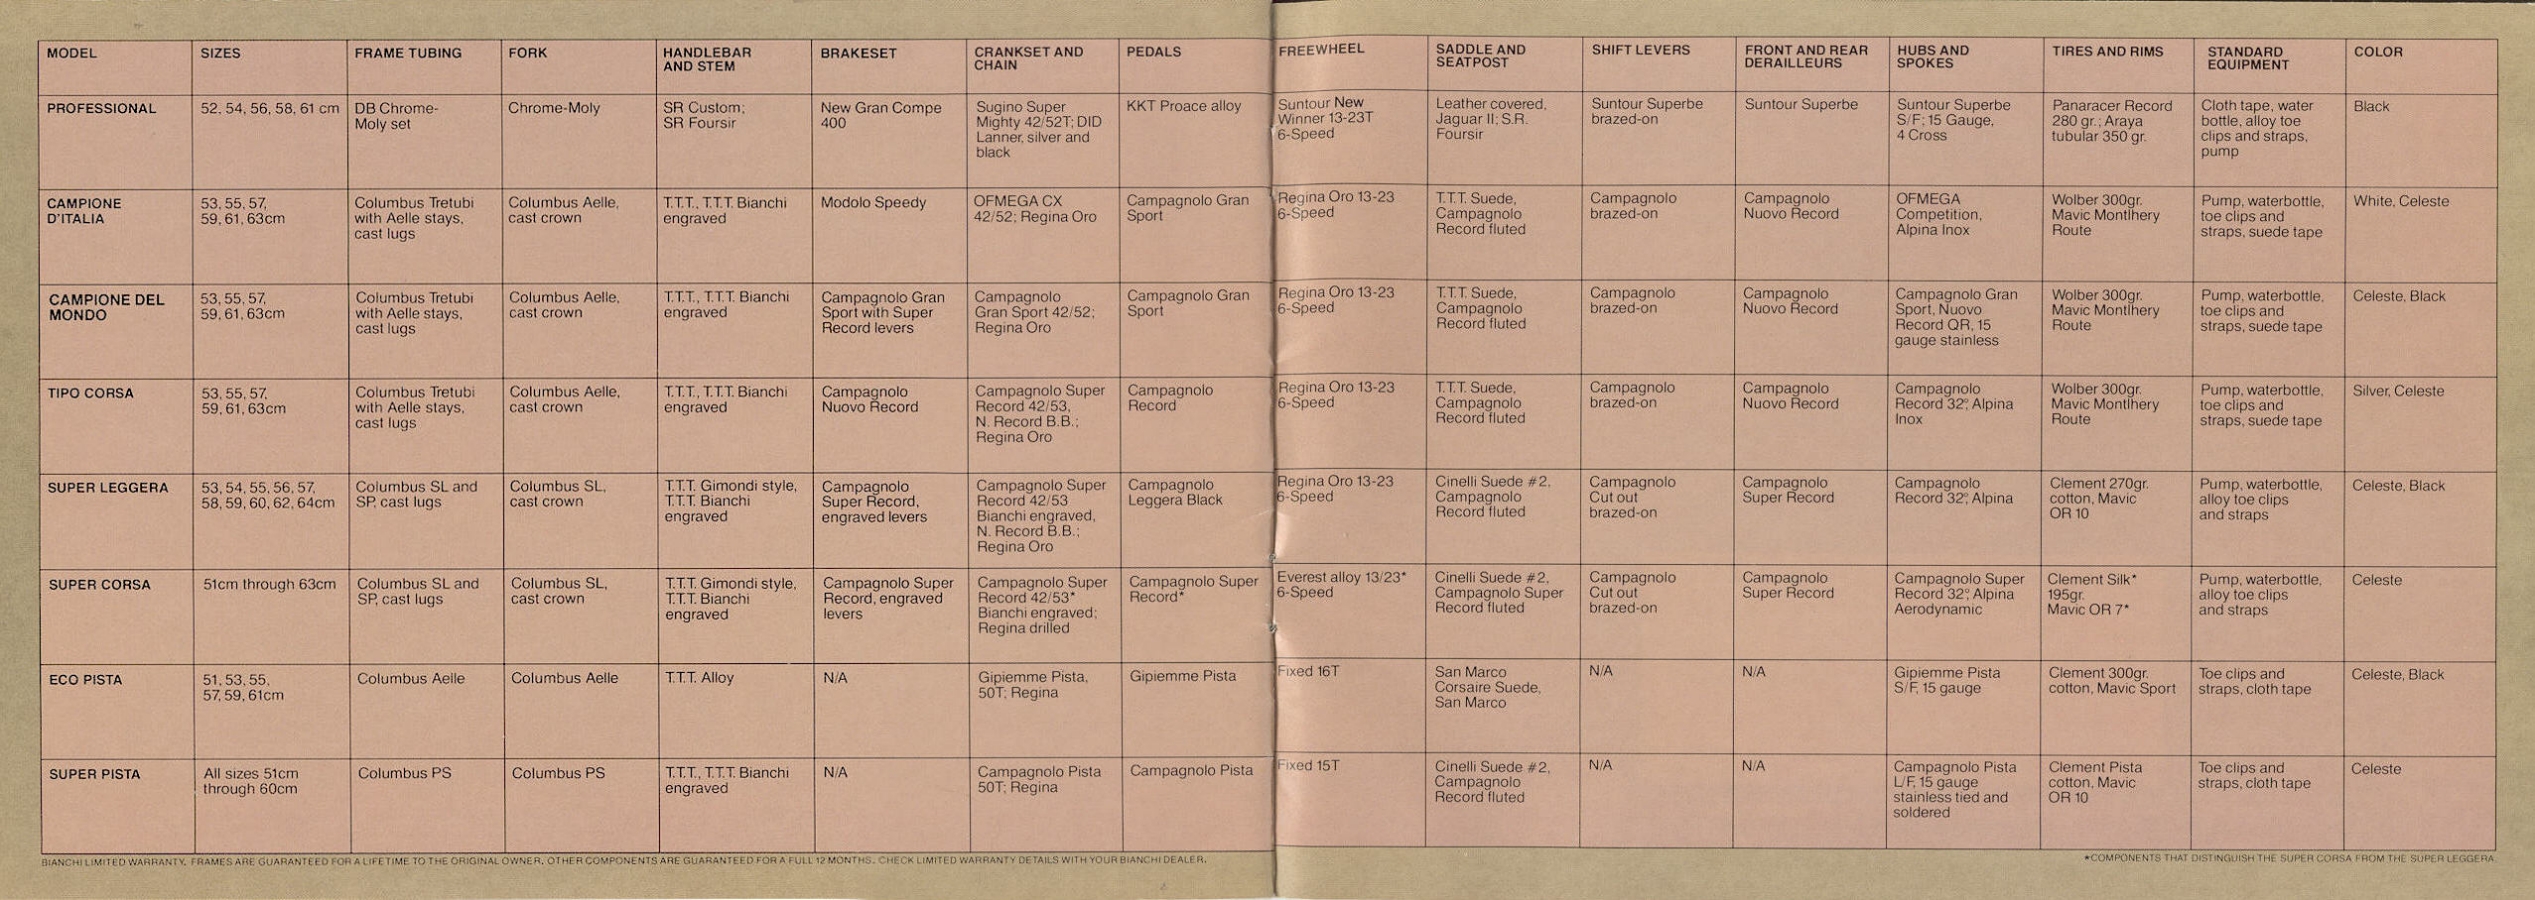 Bianchi catalog (1982)